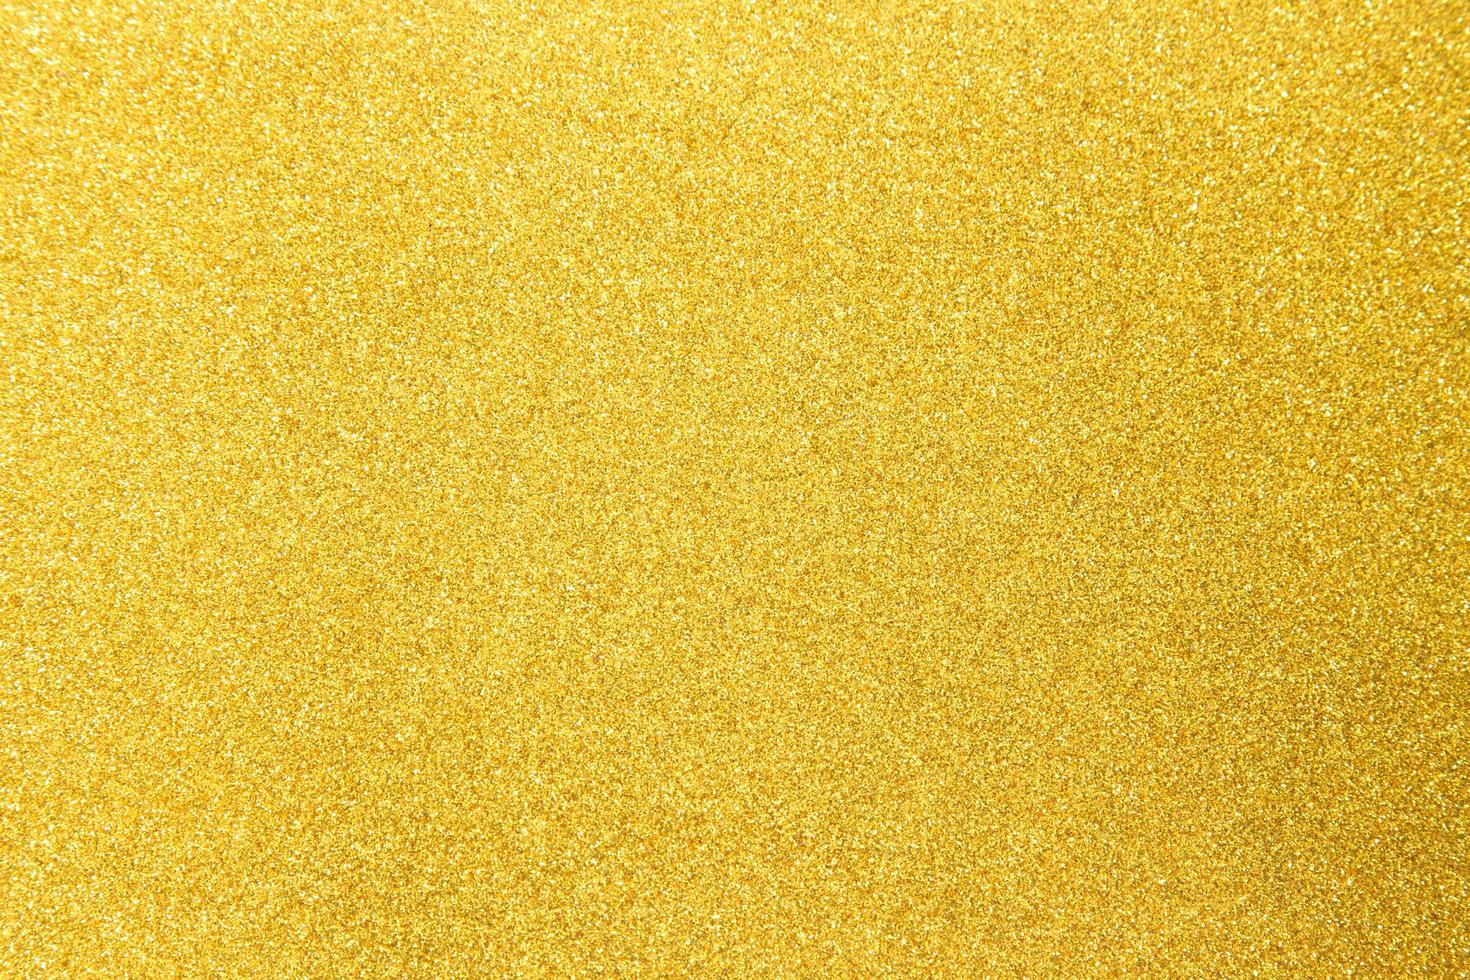 Golden glitter texture background photo